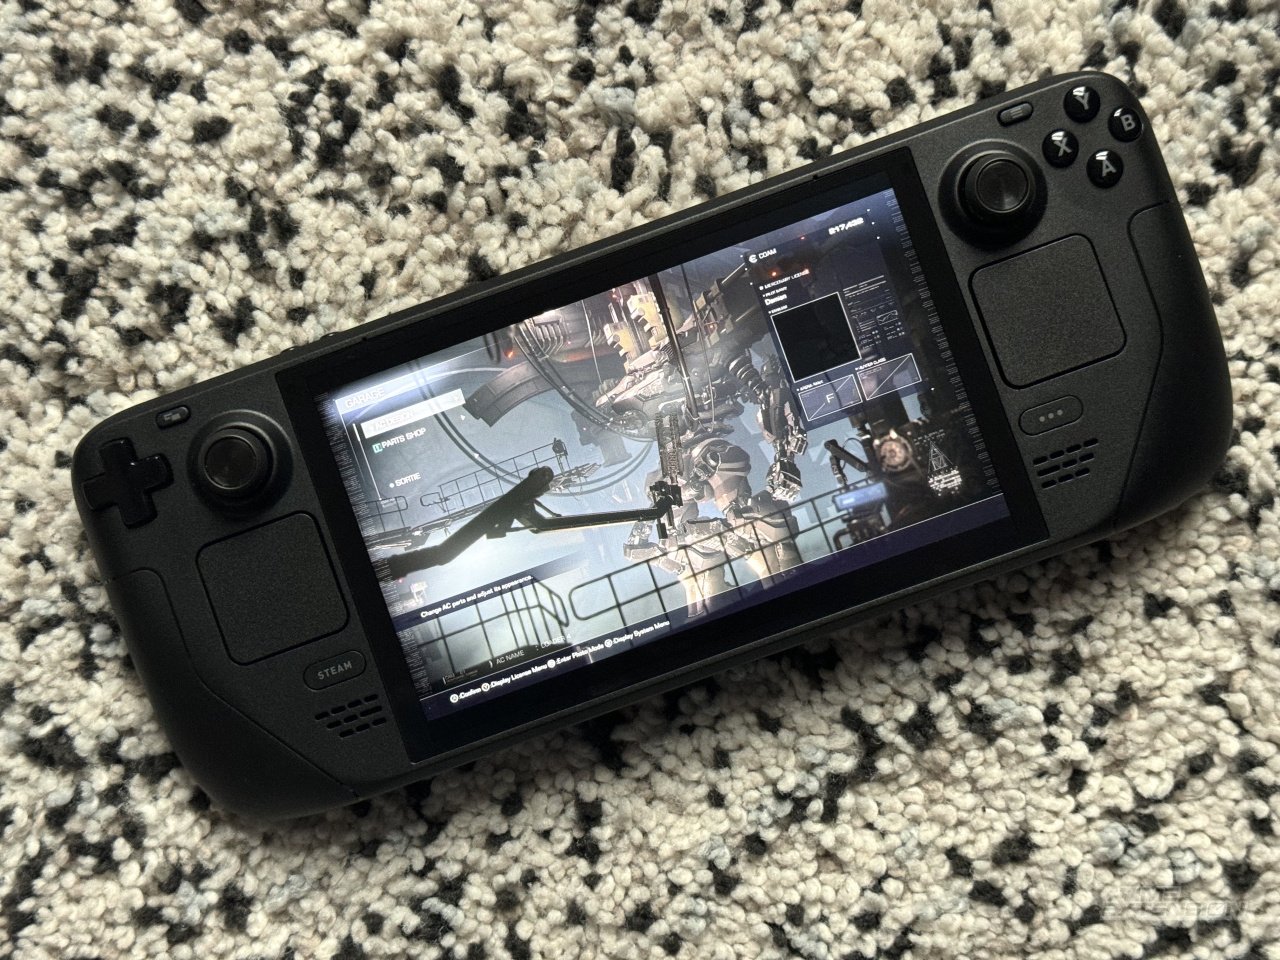 Oops: Valve Shows Nintendo Switch Emulator In Steam Deck Video